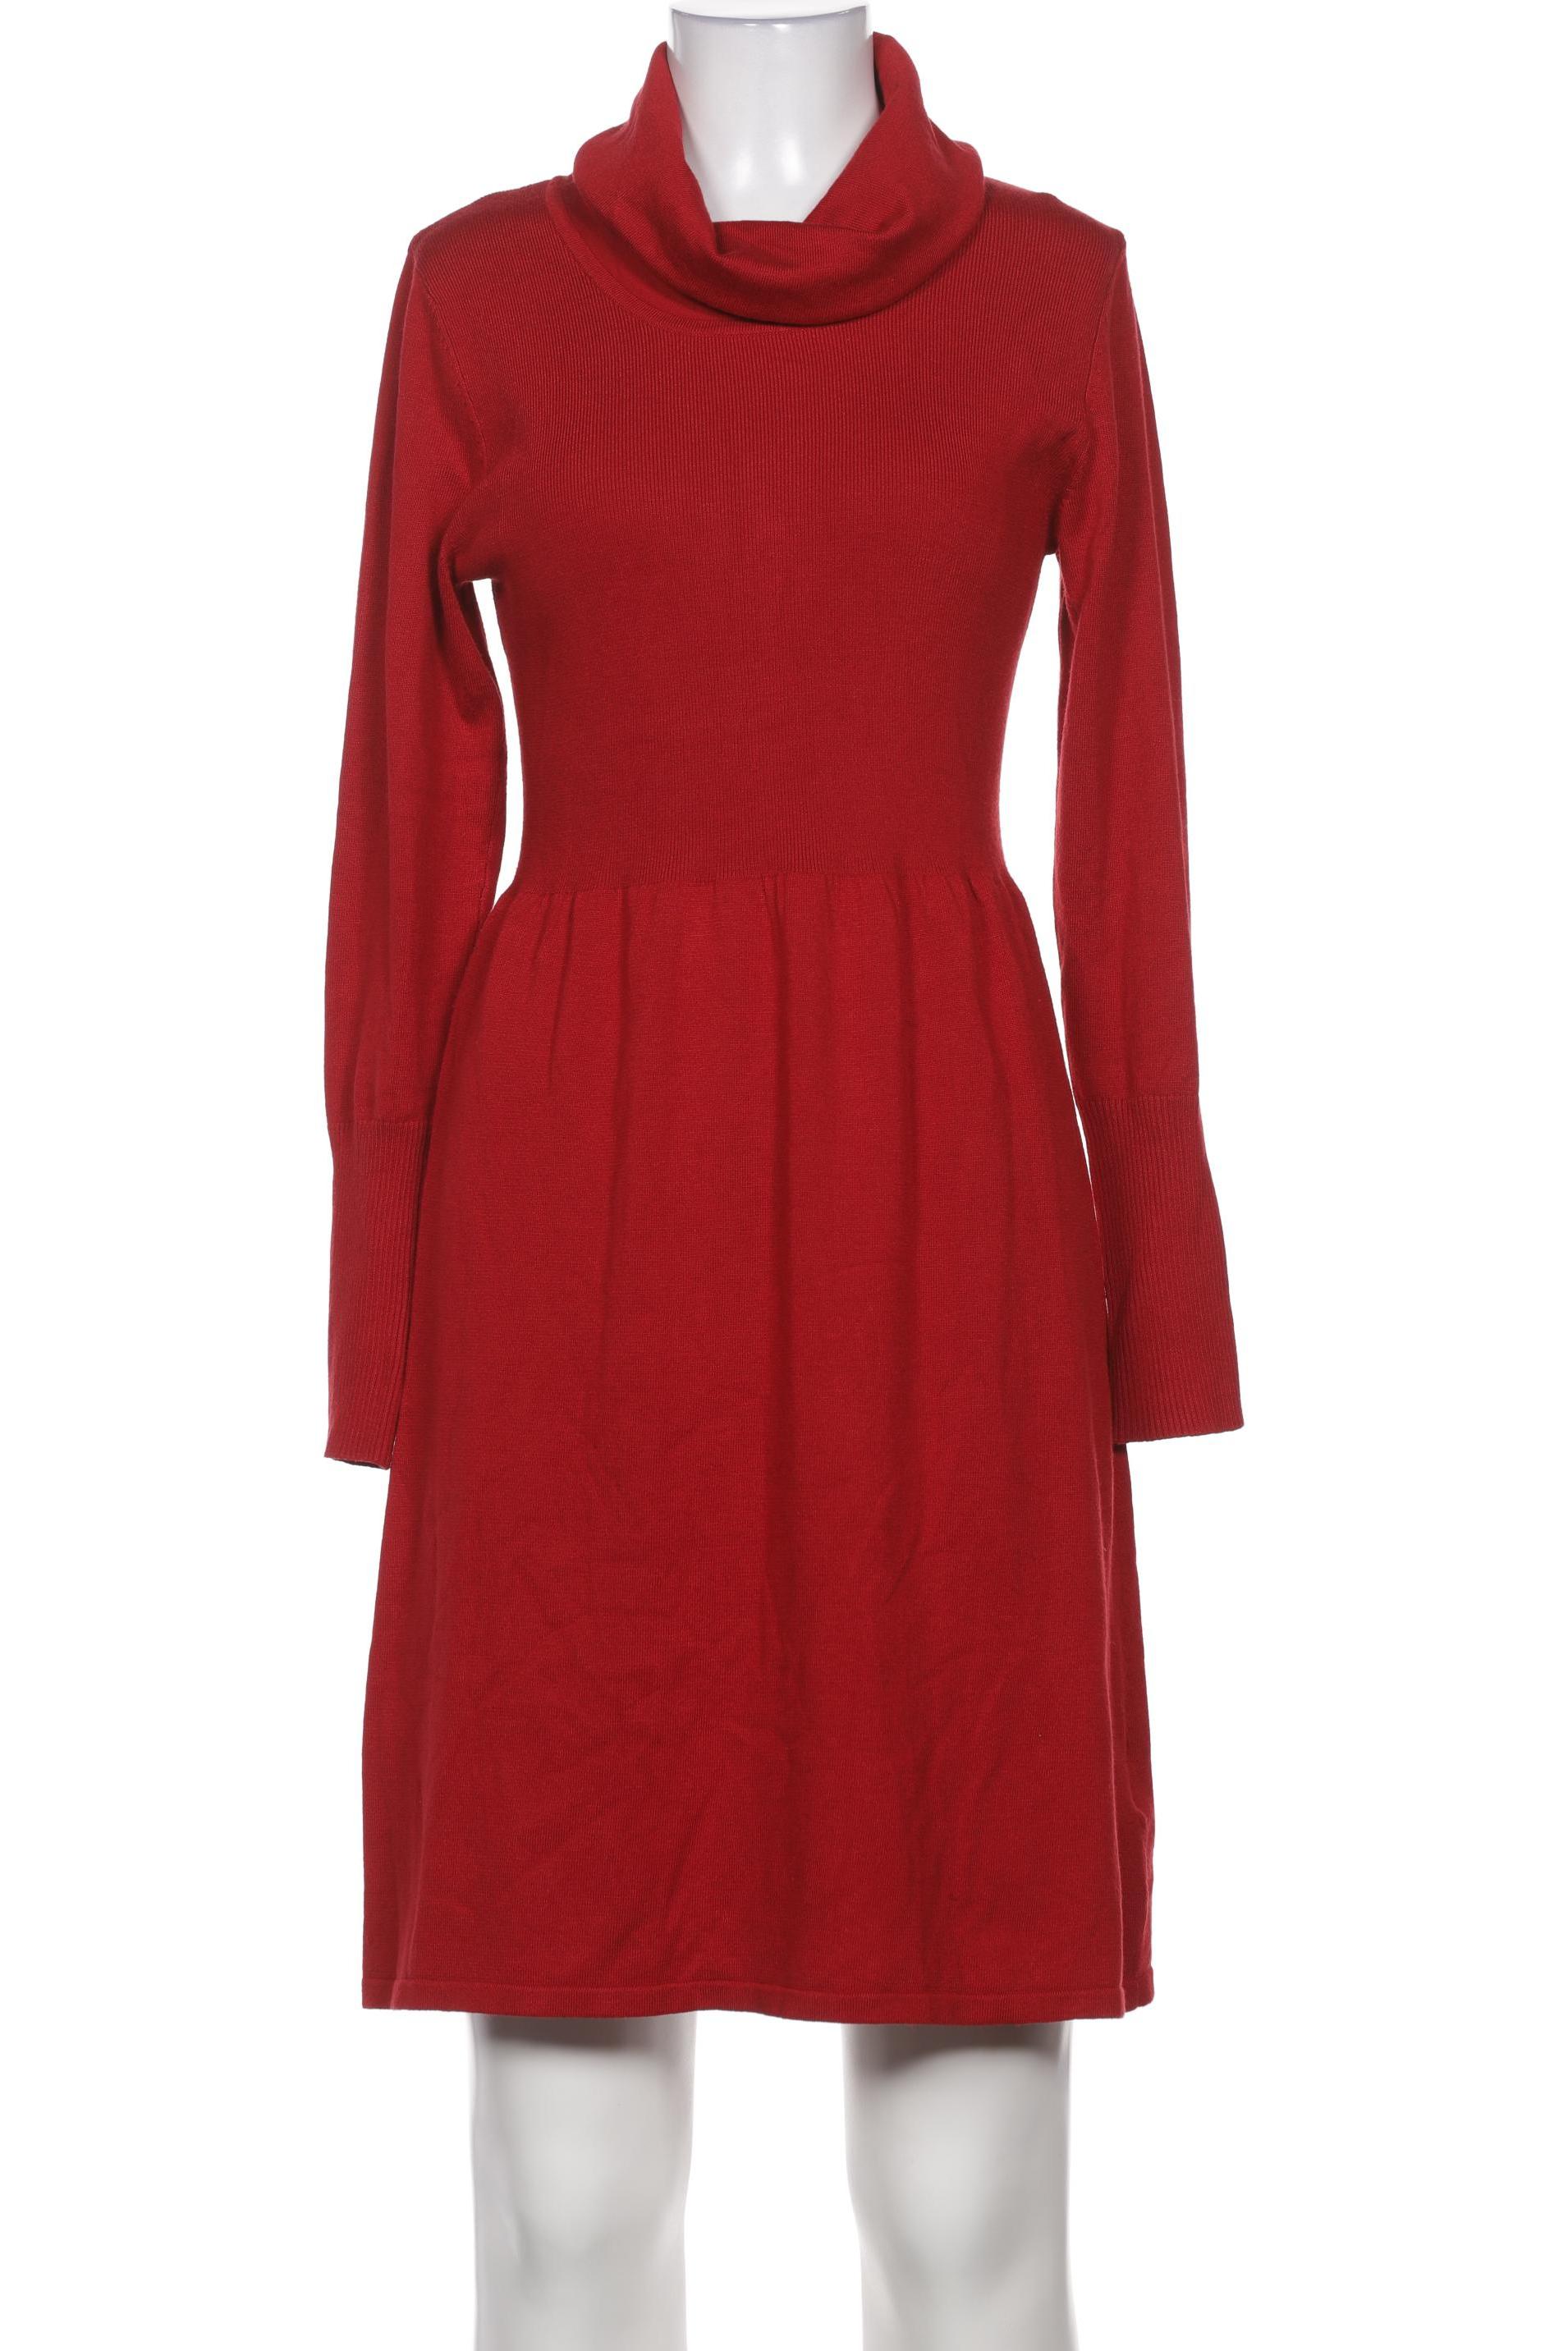 Betty Barclay Damen Kleid, rot von Betty Barclay